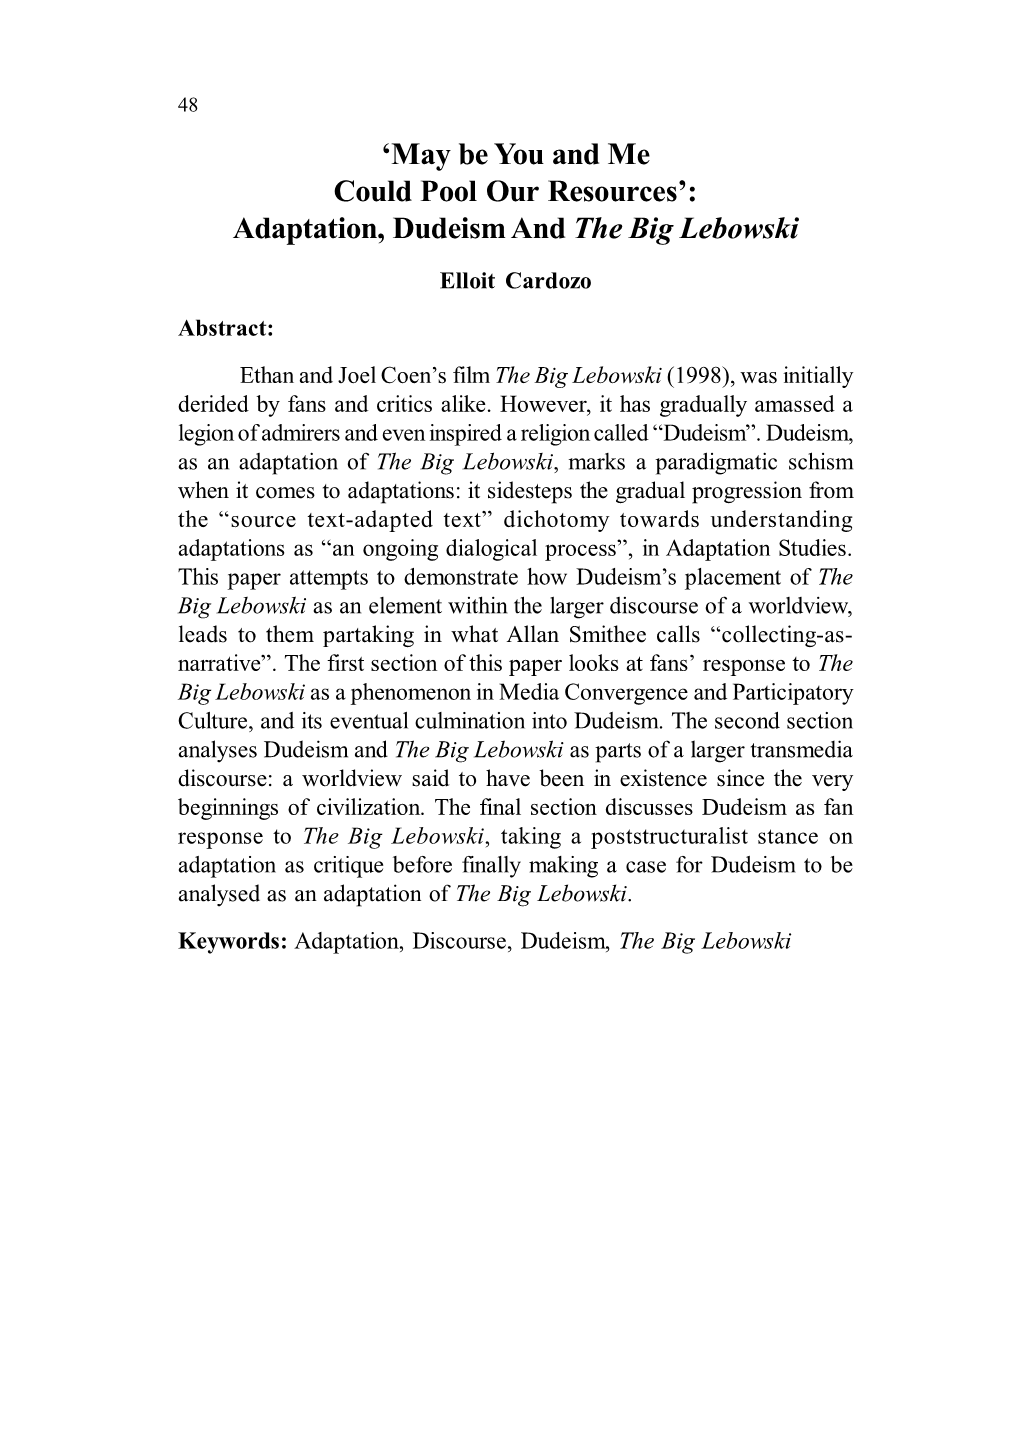 Adaptation, Dudeism and the Big Lebowski